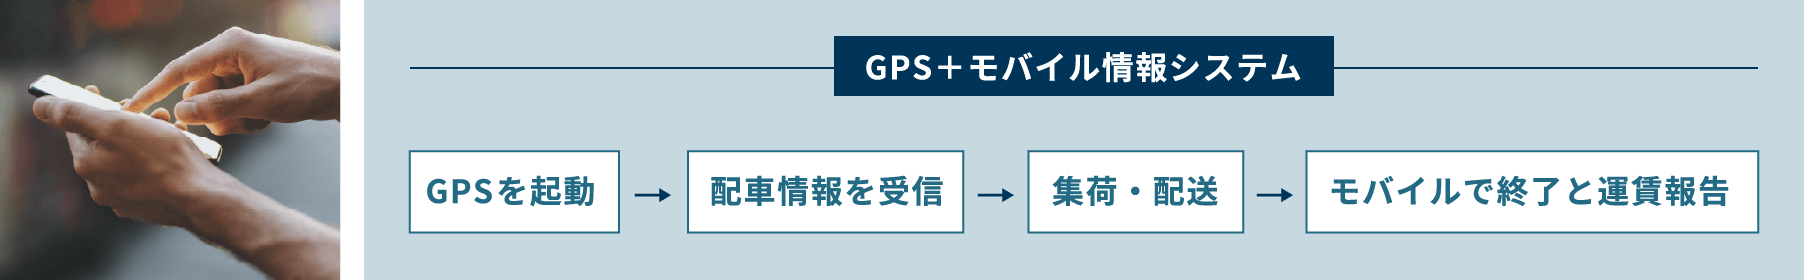 GPS+モバイル情報システム